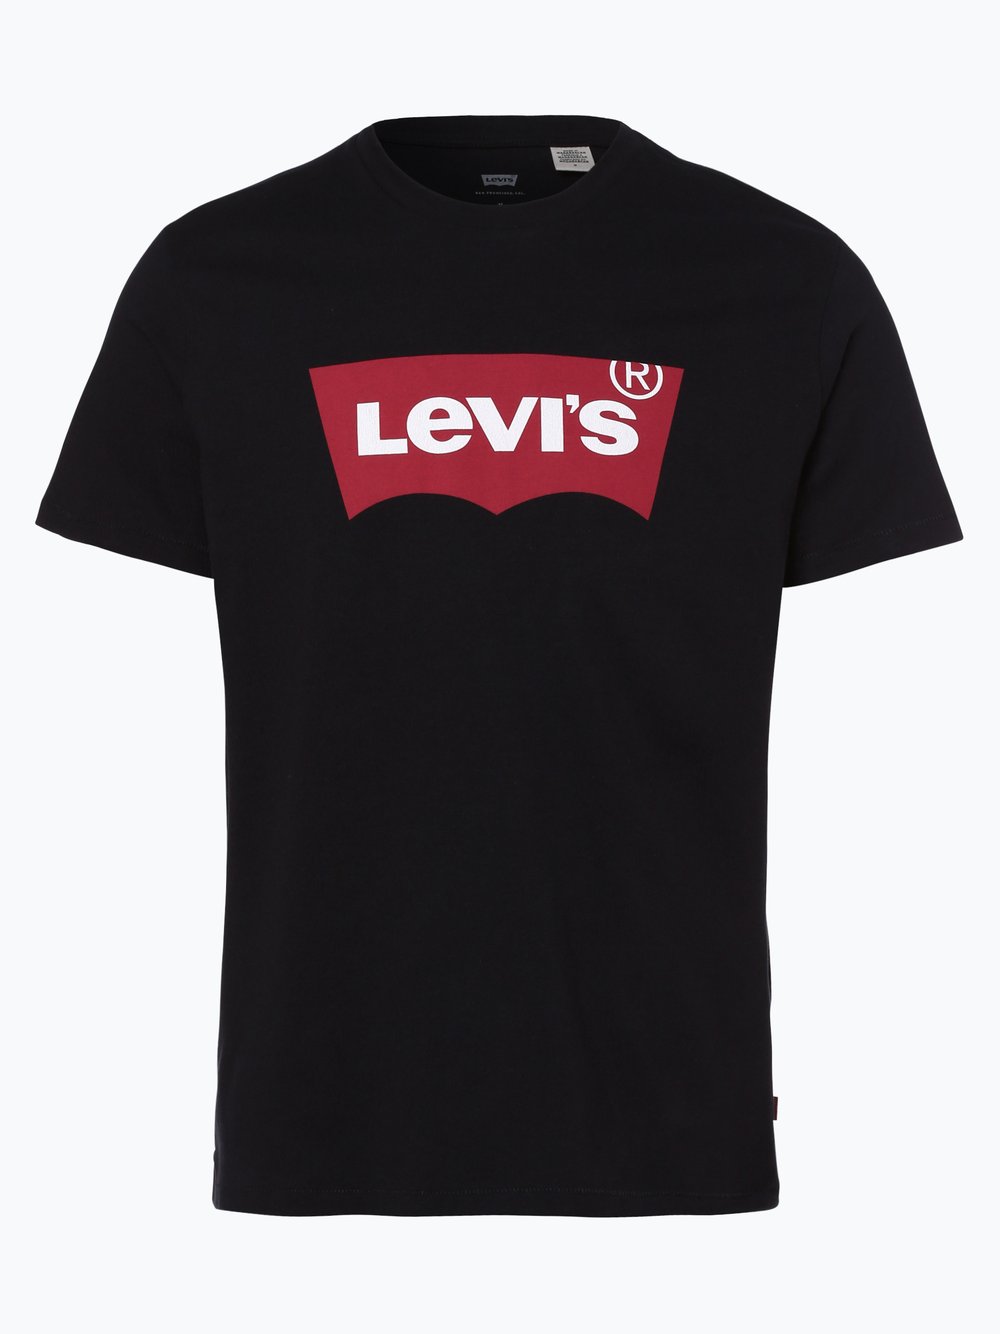 Levi's - T-shirt męski, czarny Levi's